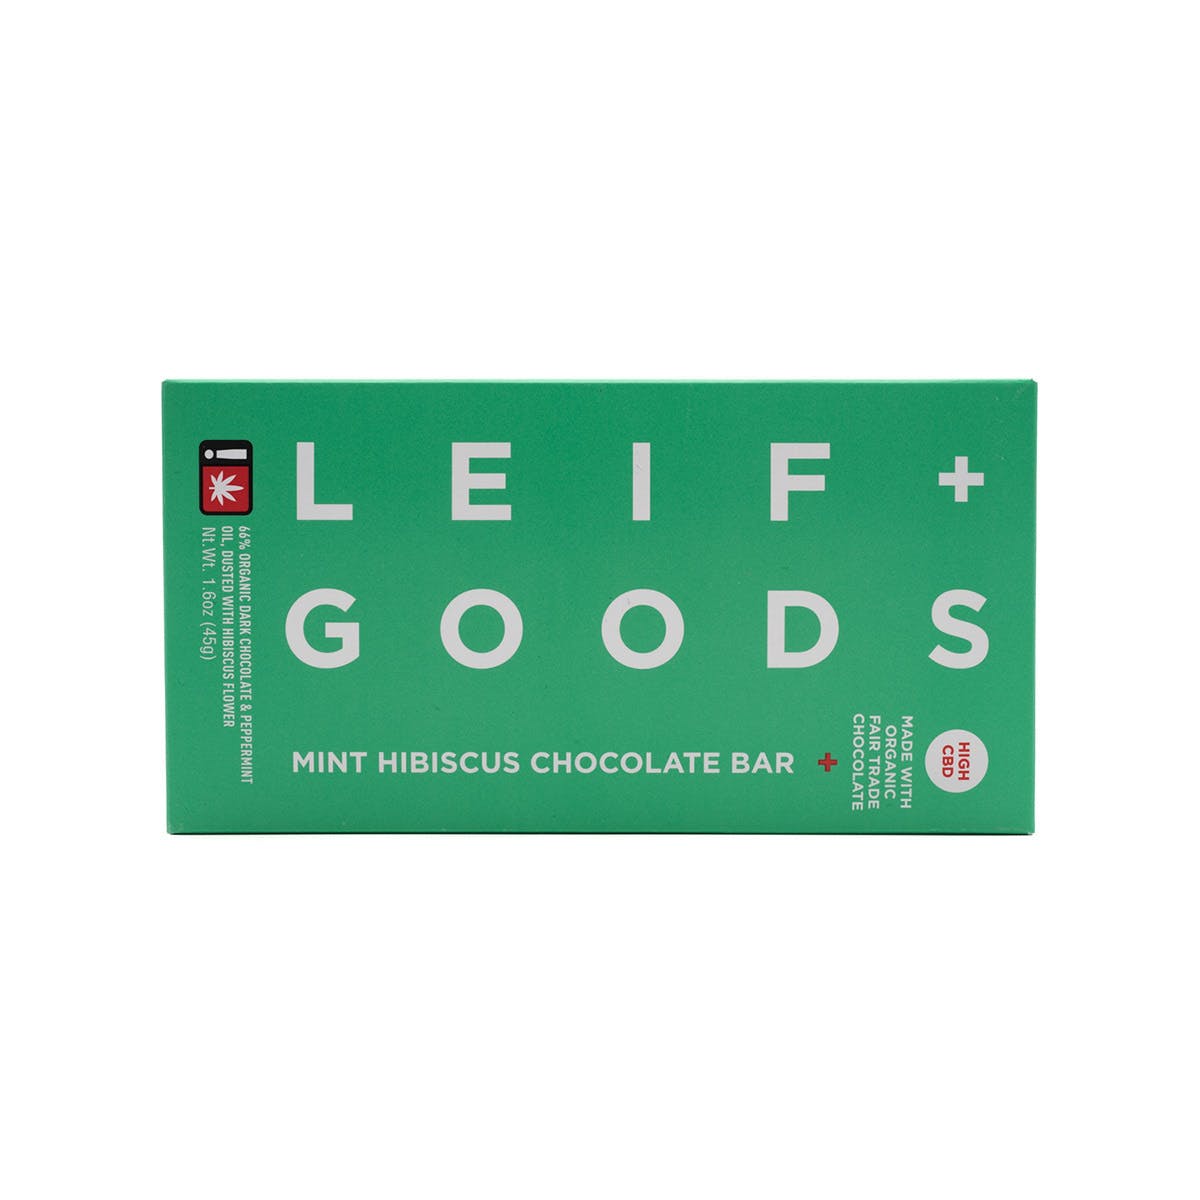 Mint Hibiscus Chocolate Bar 1:1